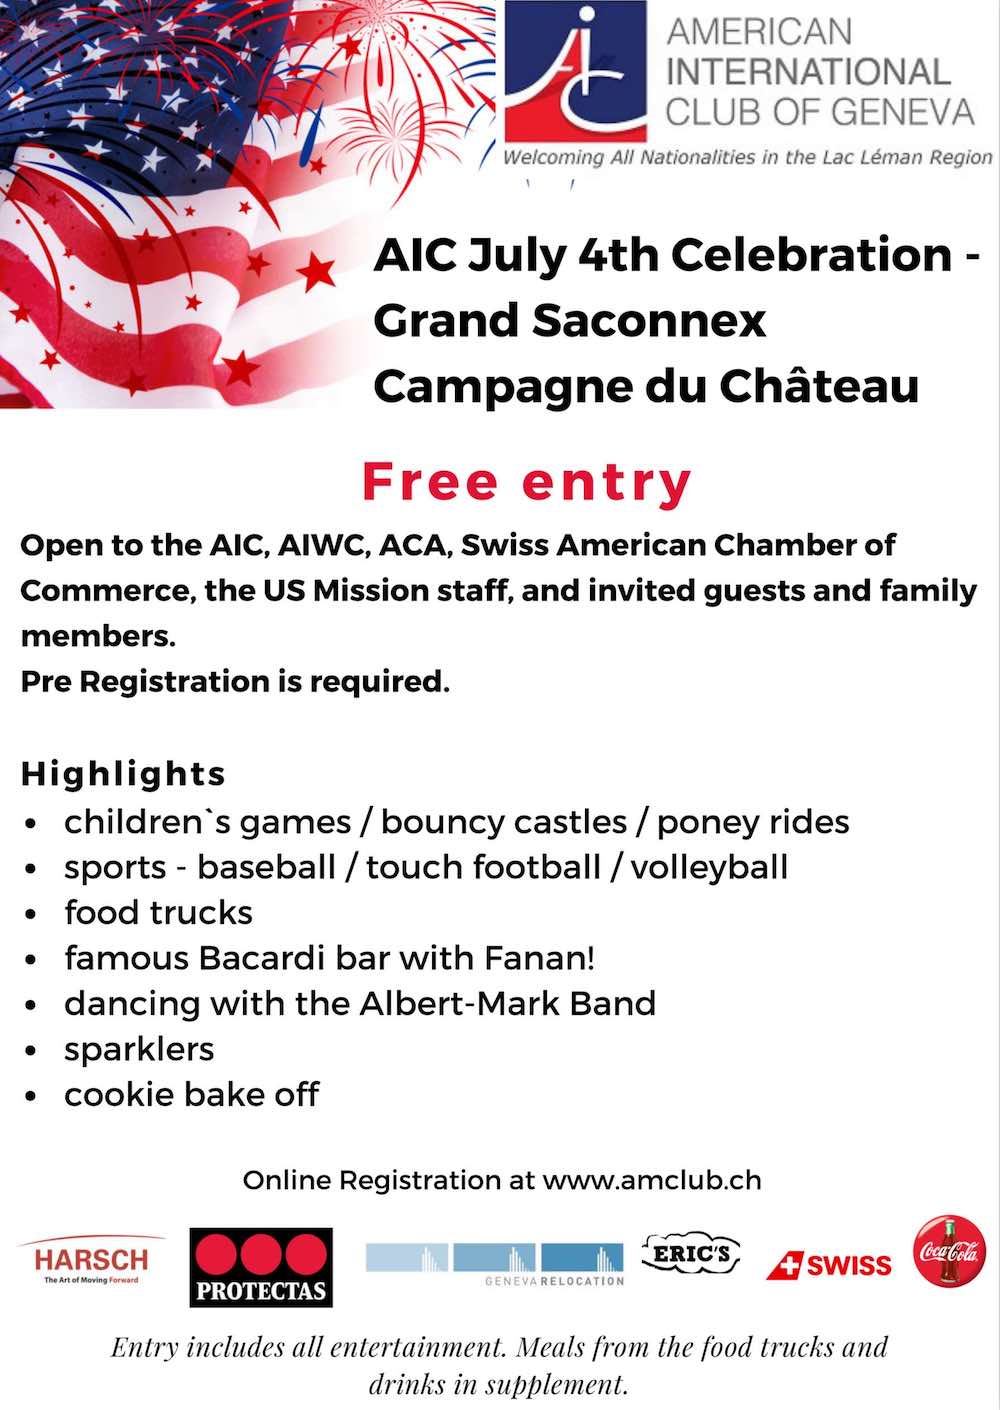 AIC July 4th invitation